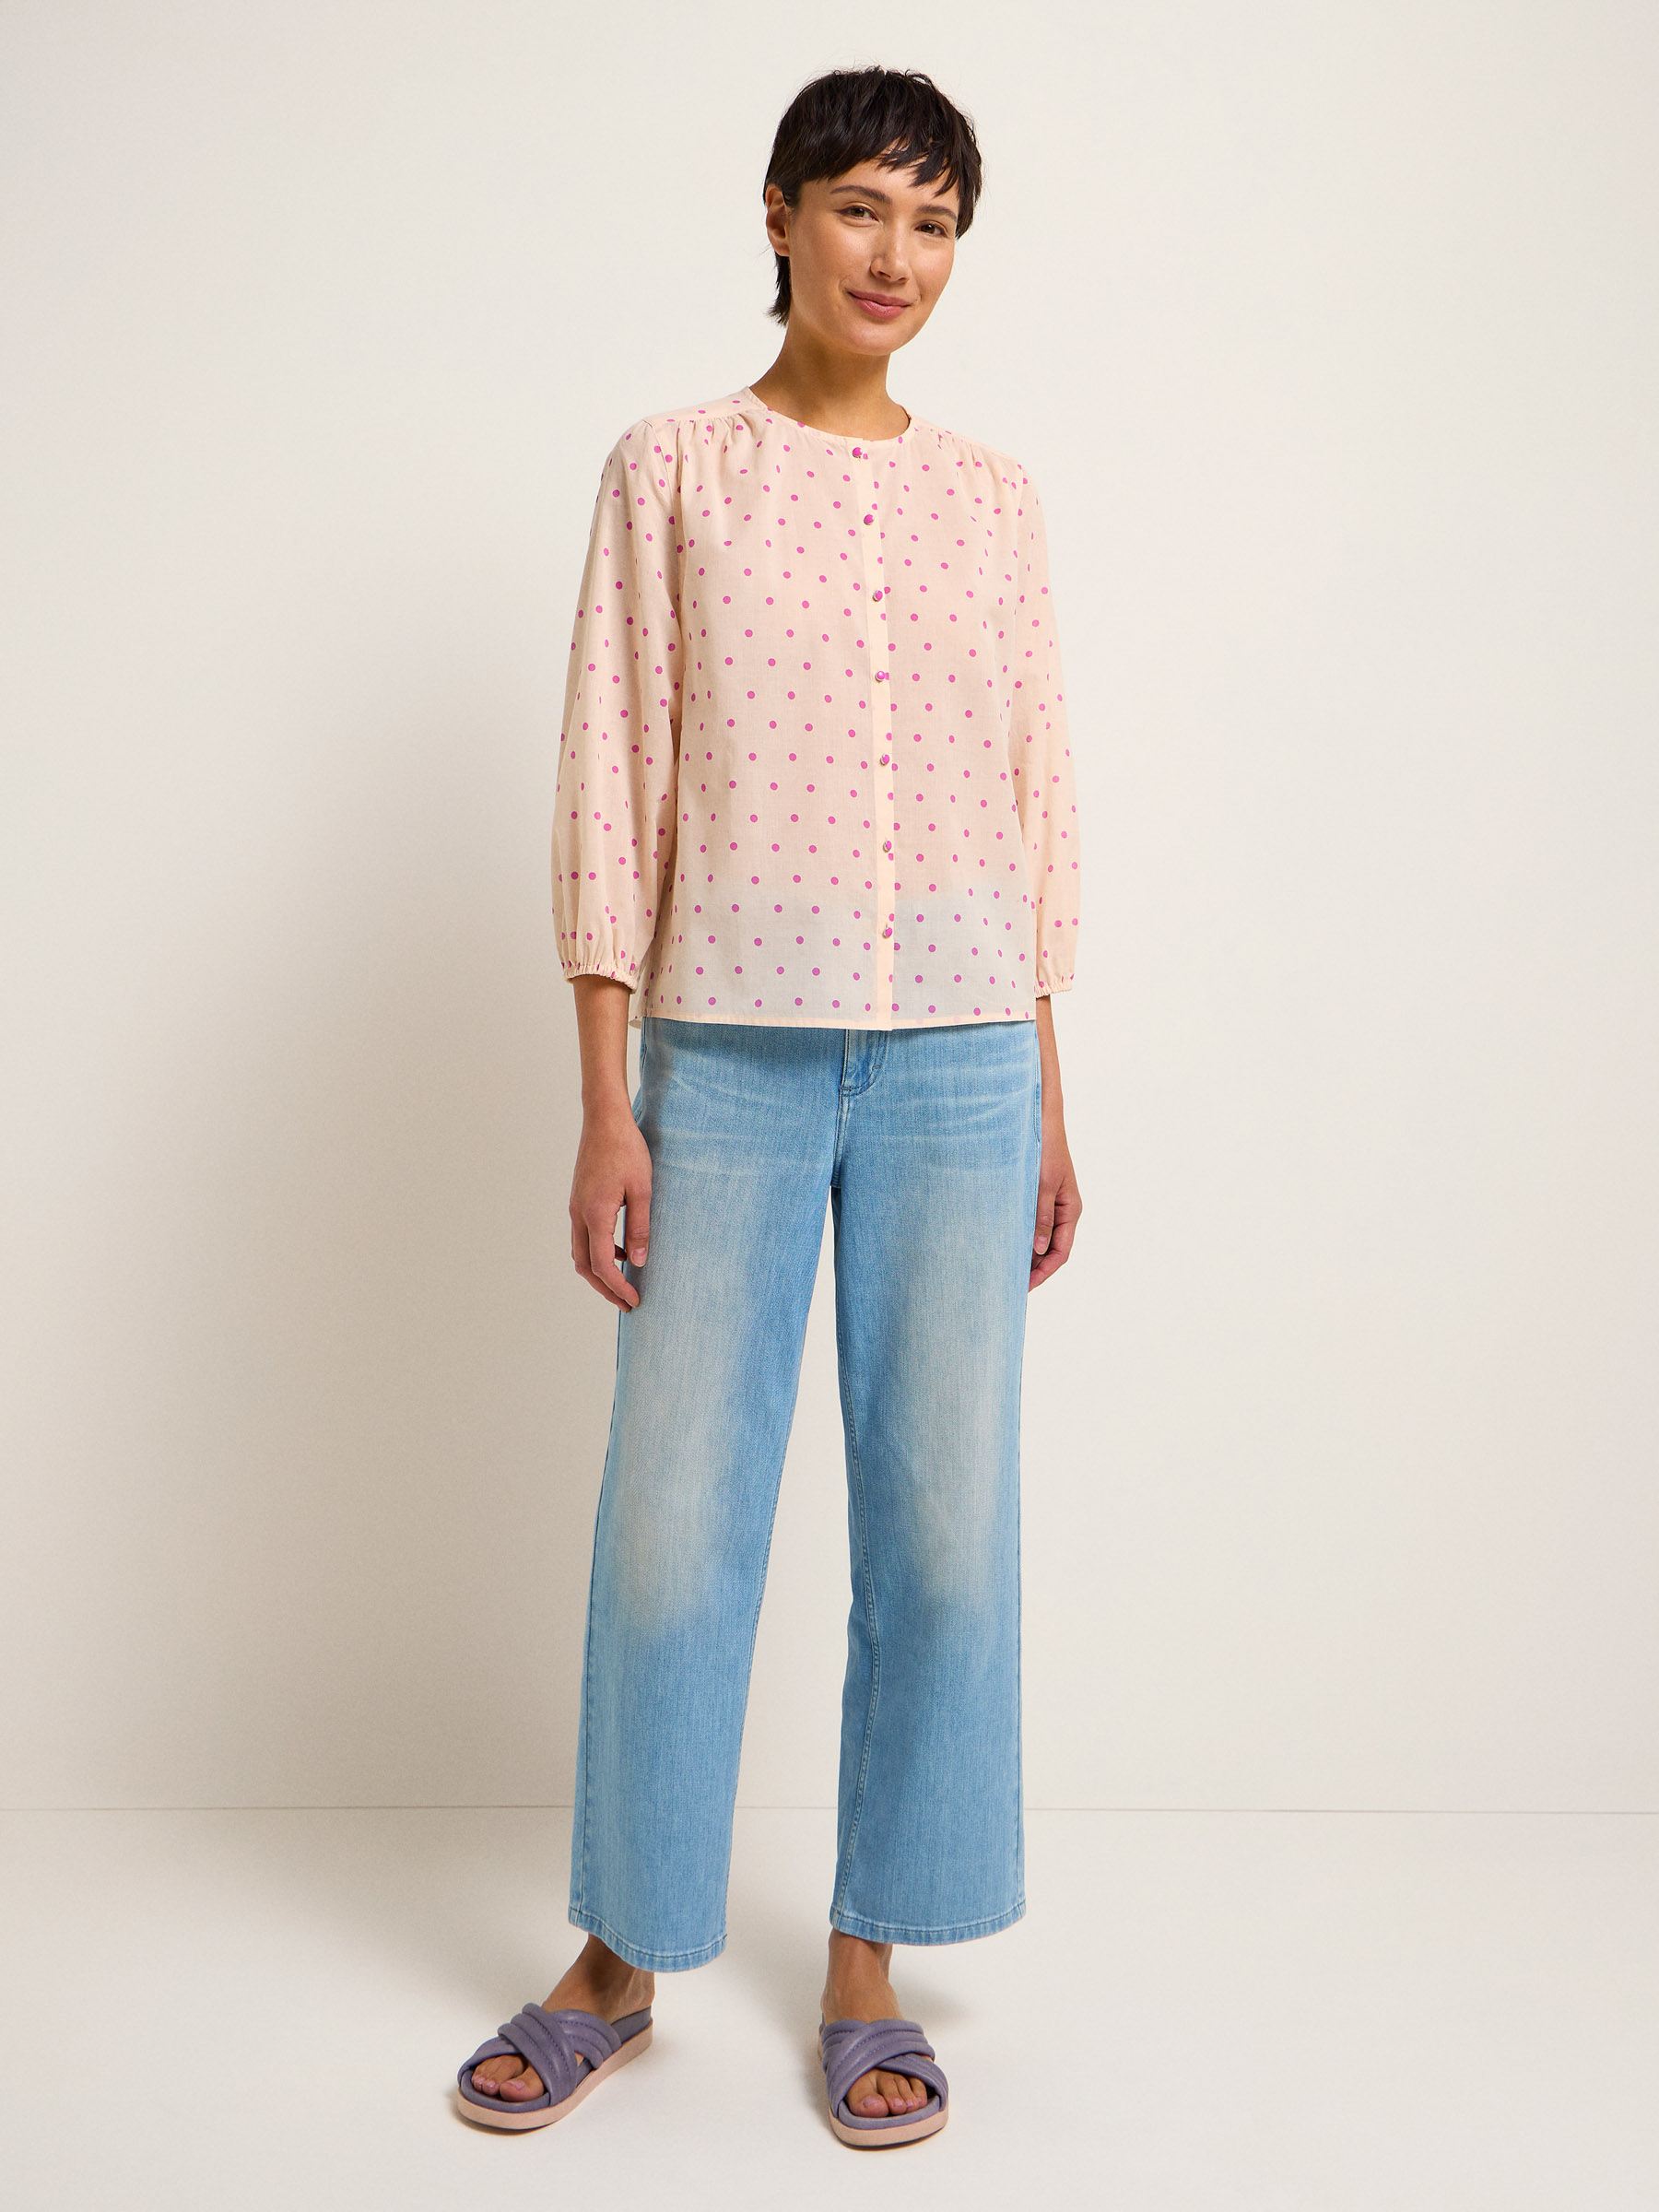 Langarm-Bluse print polka dots bloom